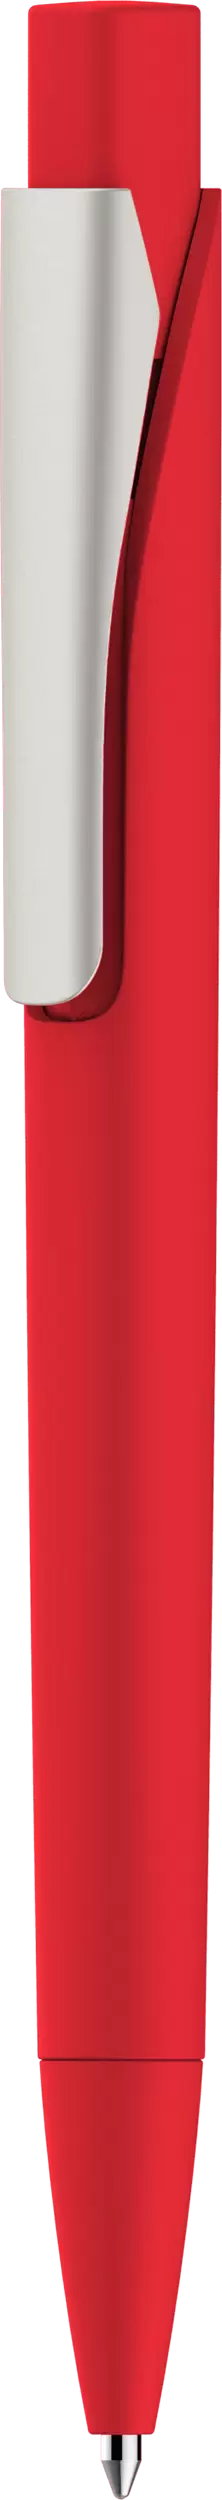 Ручка MASTER SOFT Красная 1040-03